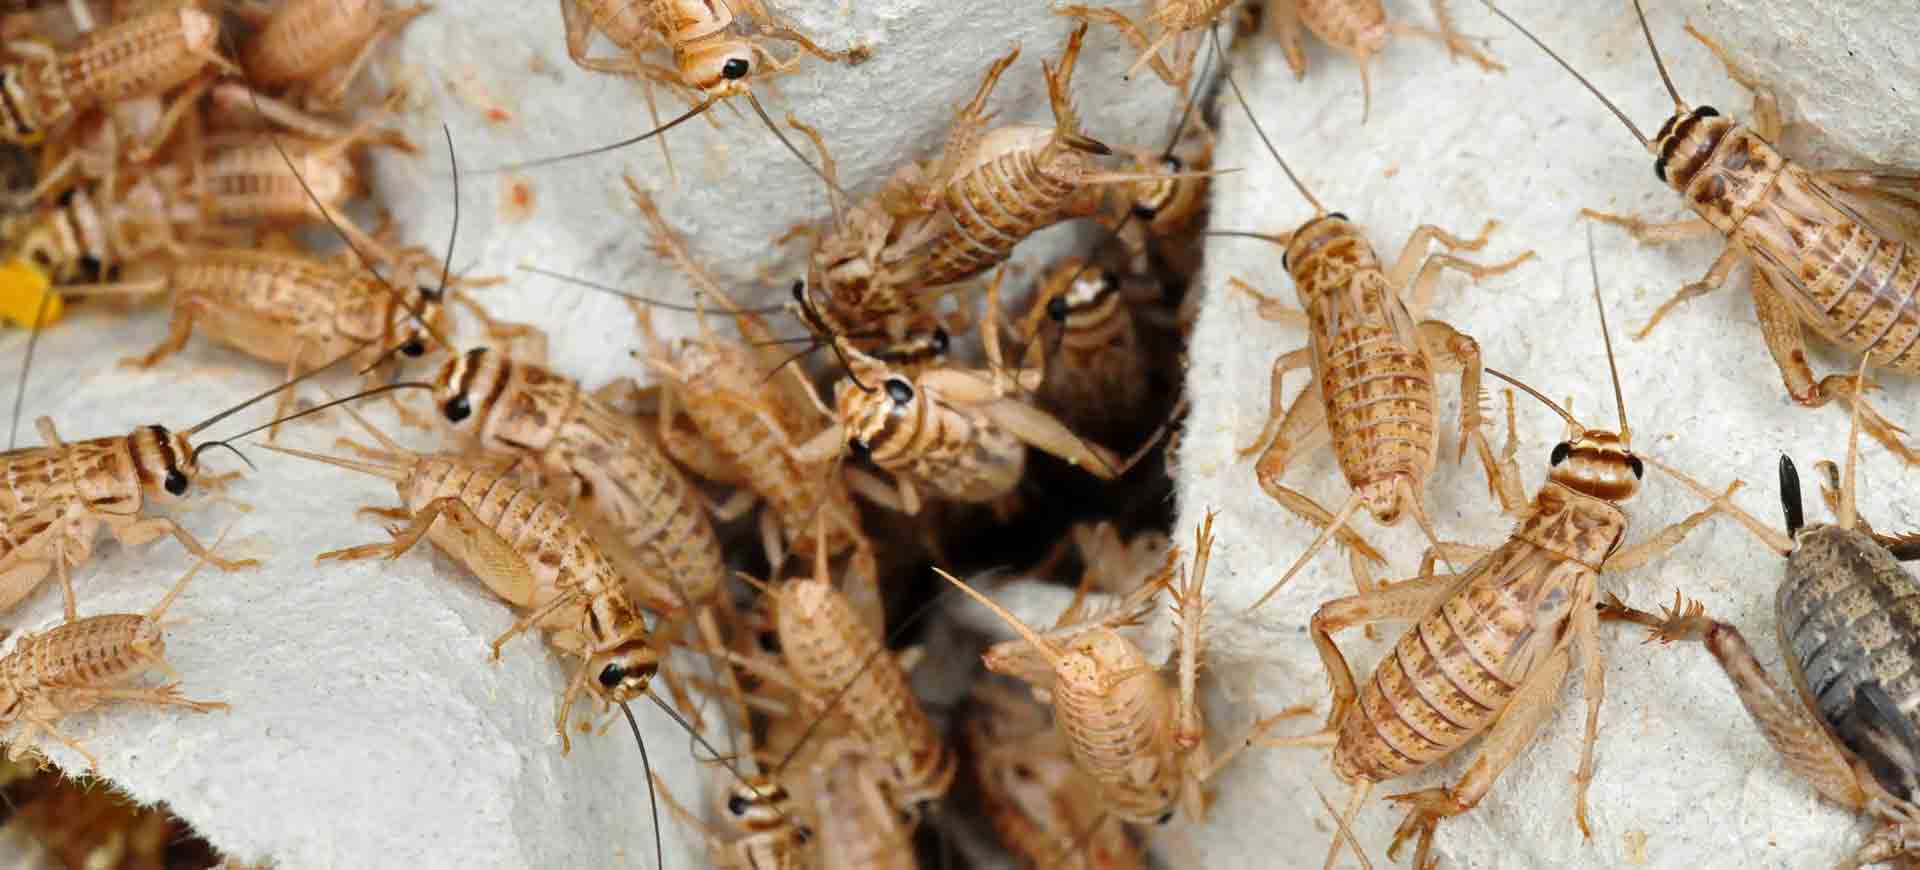 cricket pest control kearny mesa